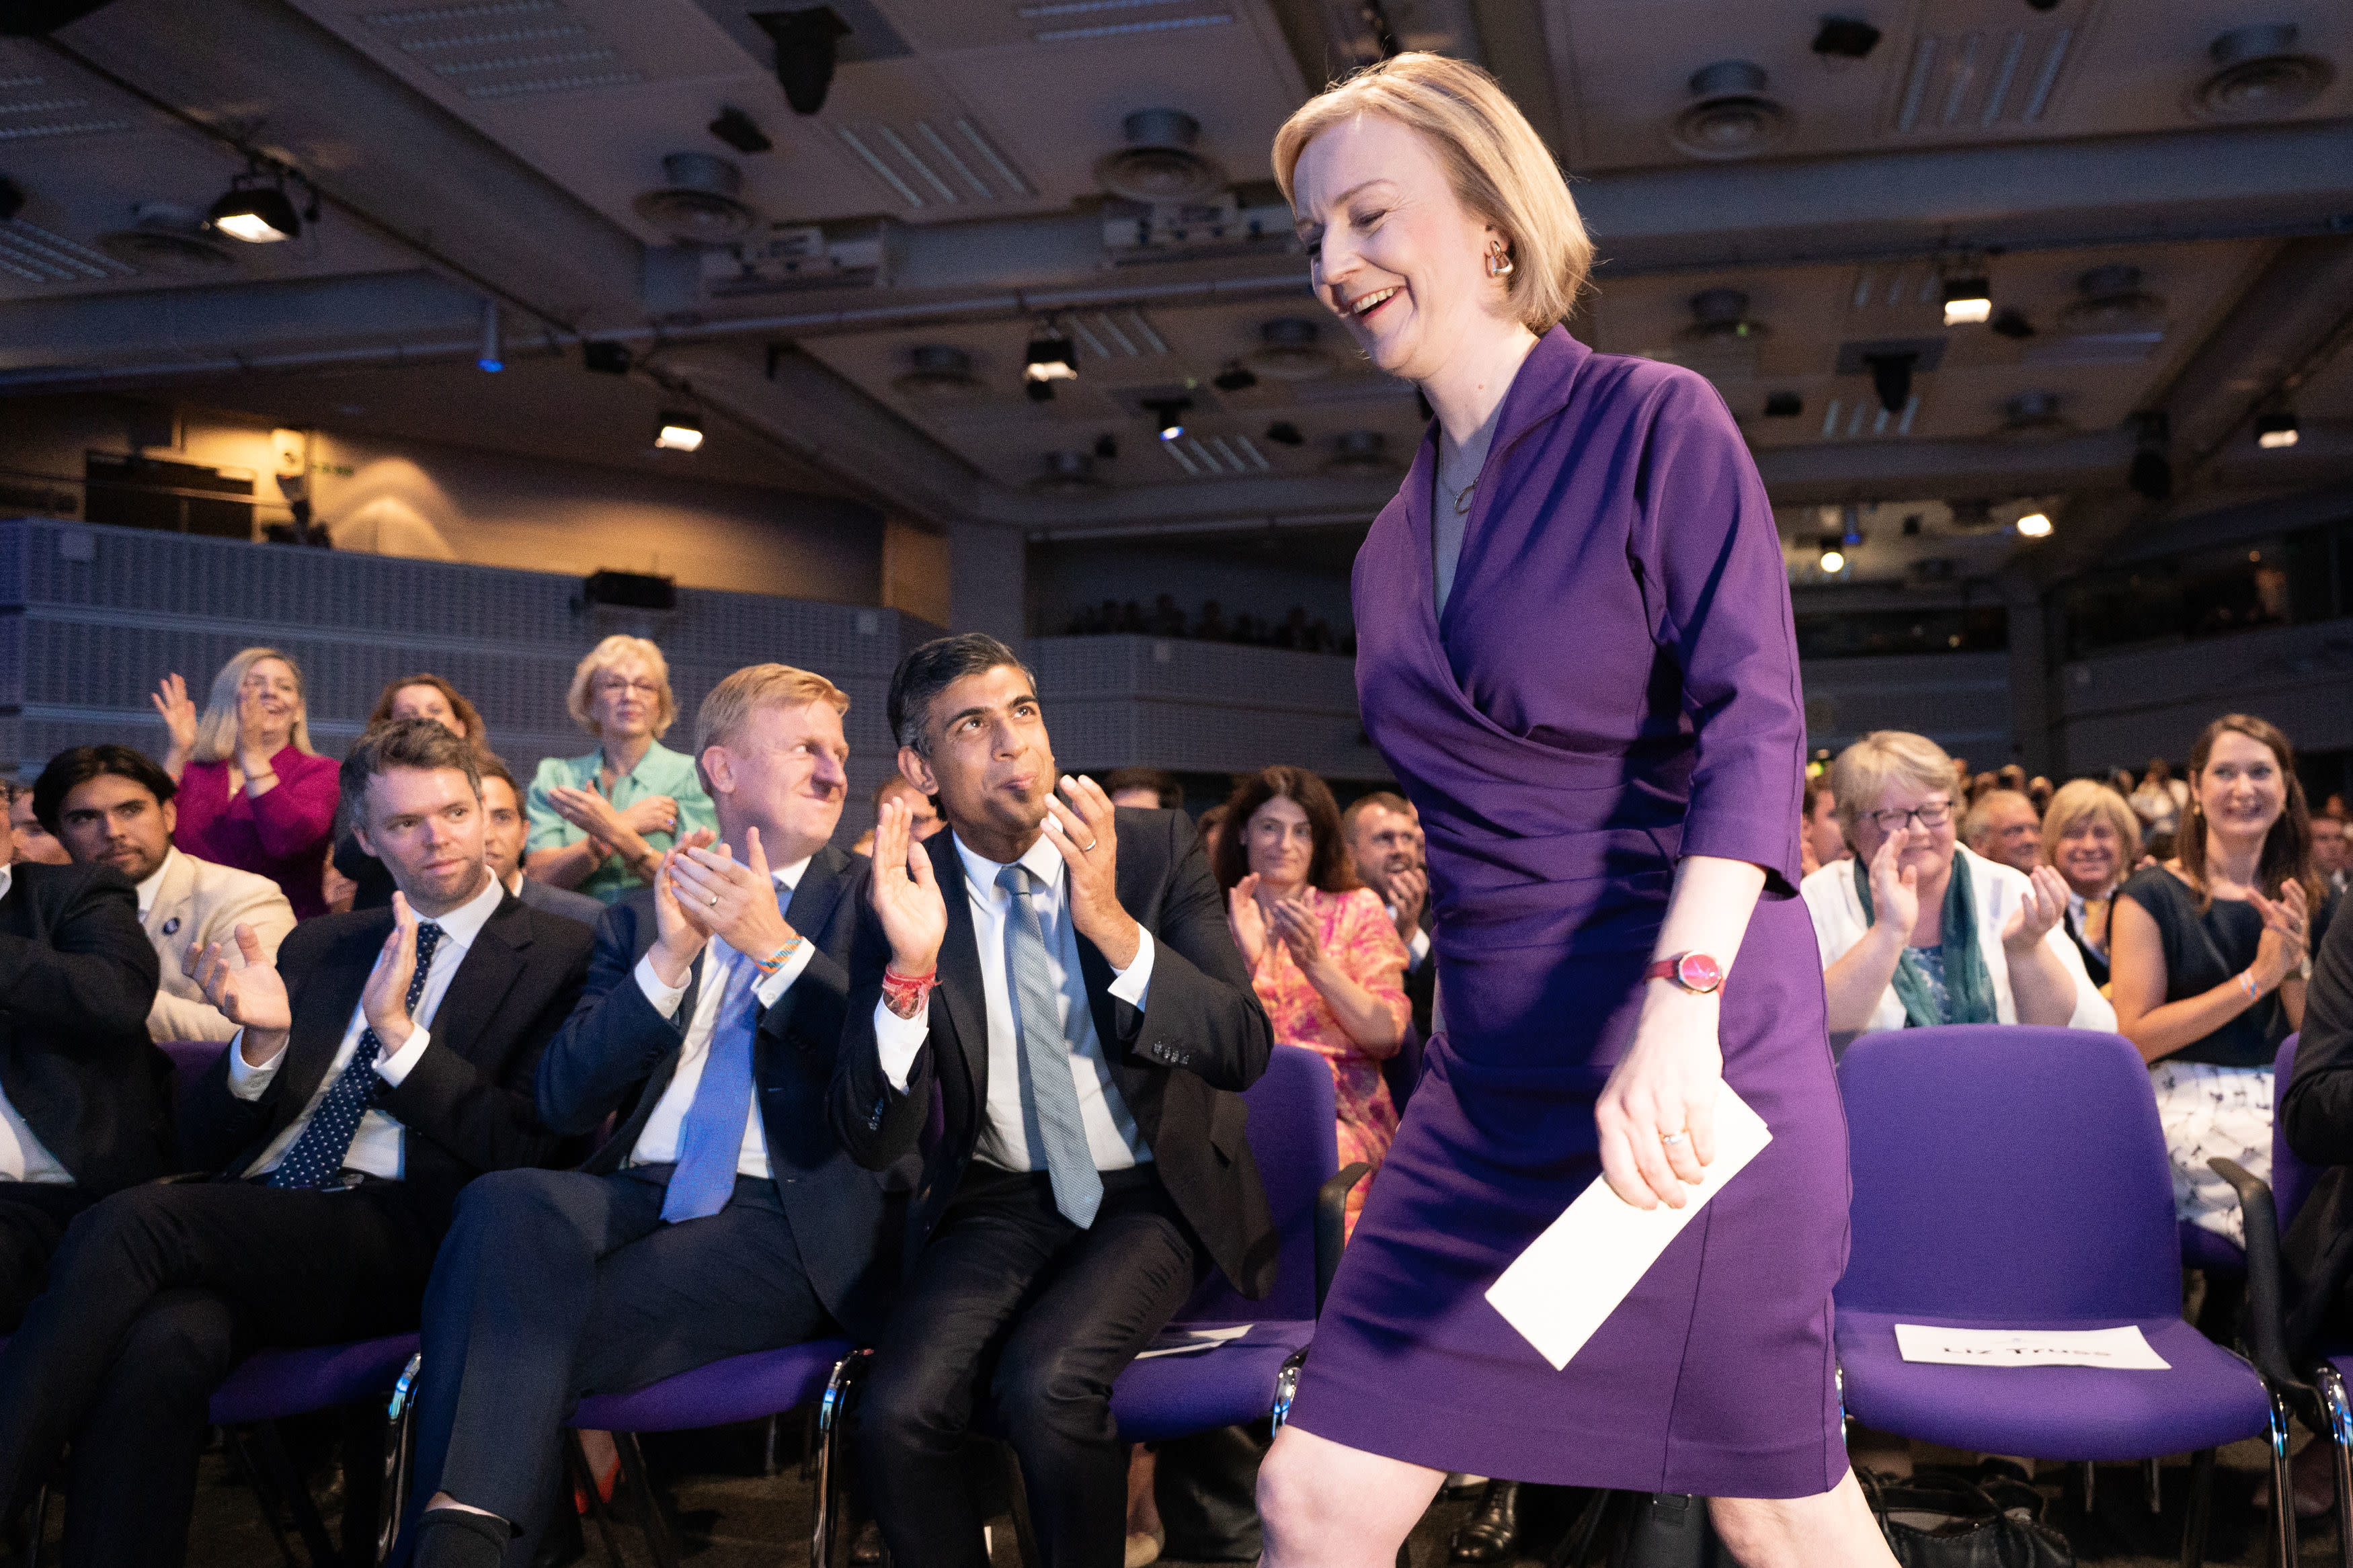 Finnish leaders congratulate the new British Prime Minister Liz Truss